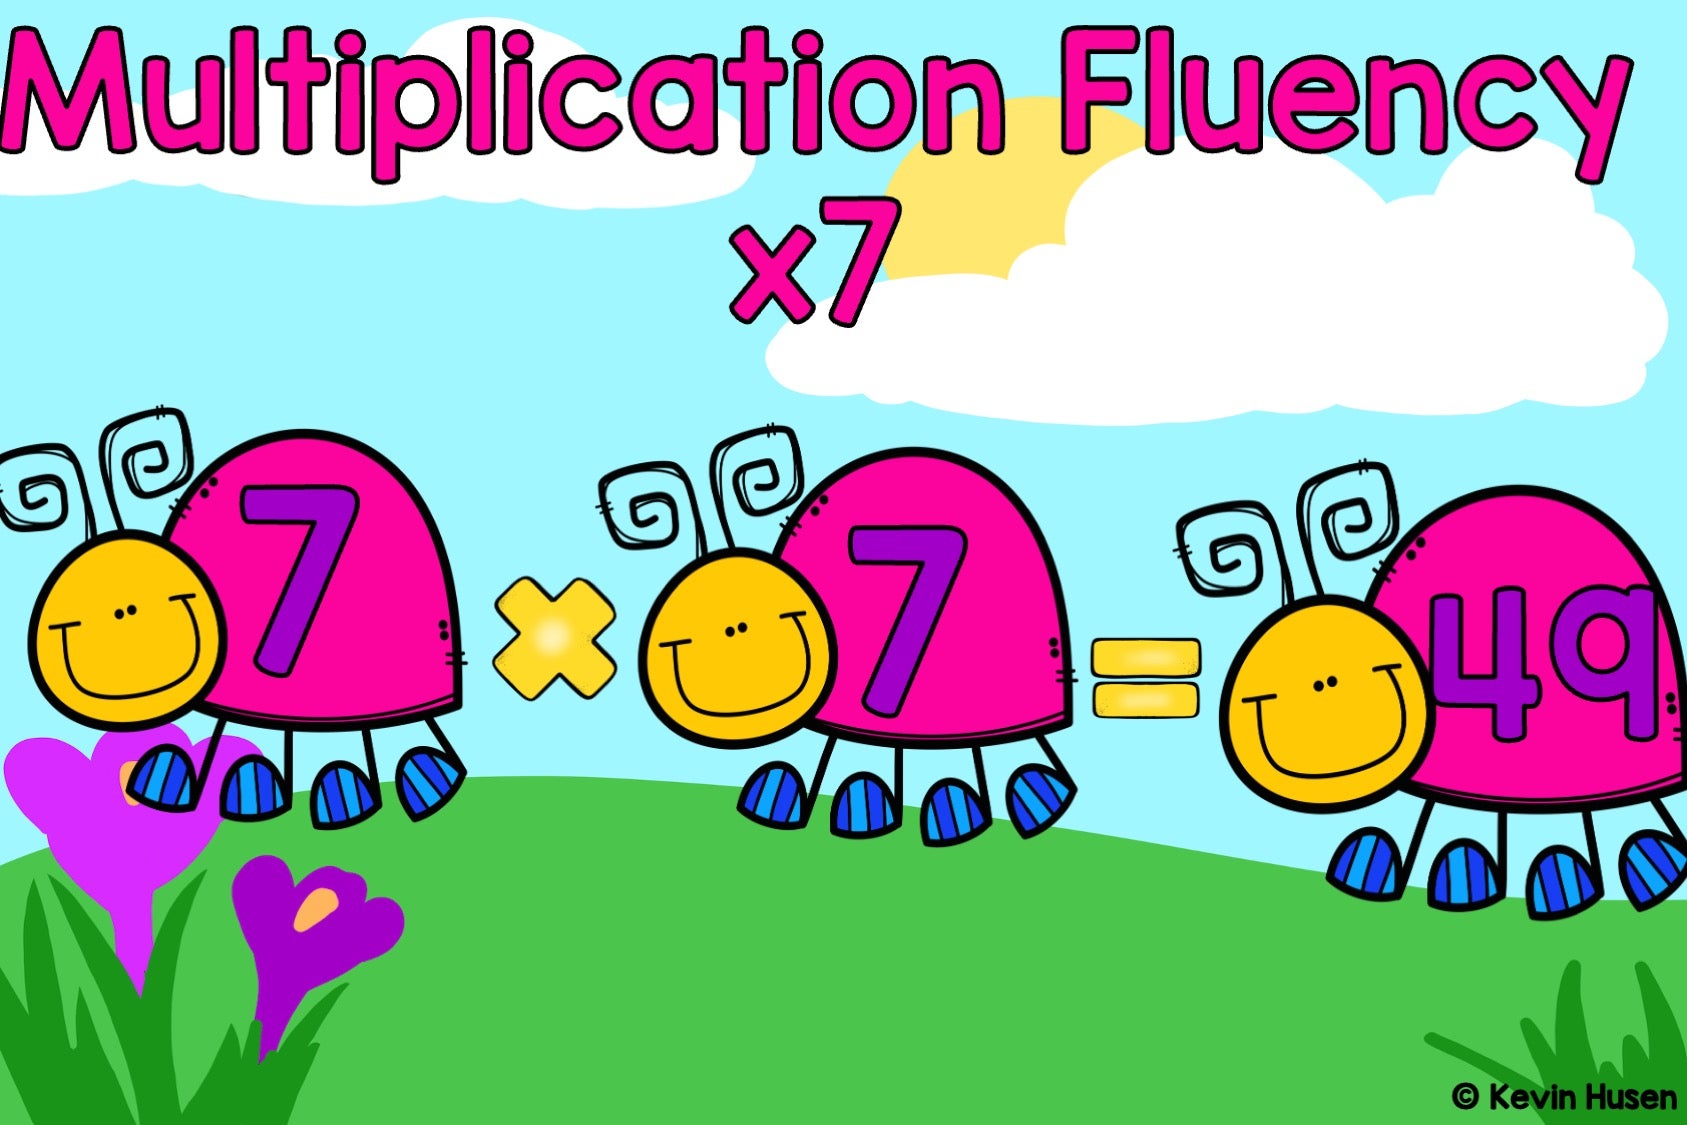 multiplication-fluency-x7-march-spring-3rd-grade-math-kahoot-third-grade-questions-answers